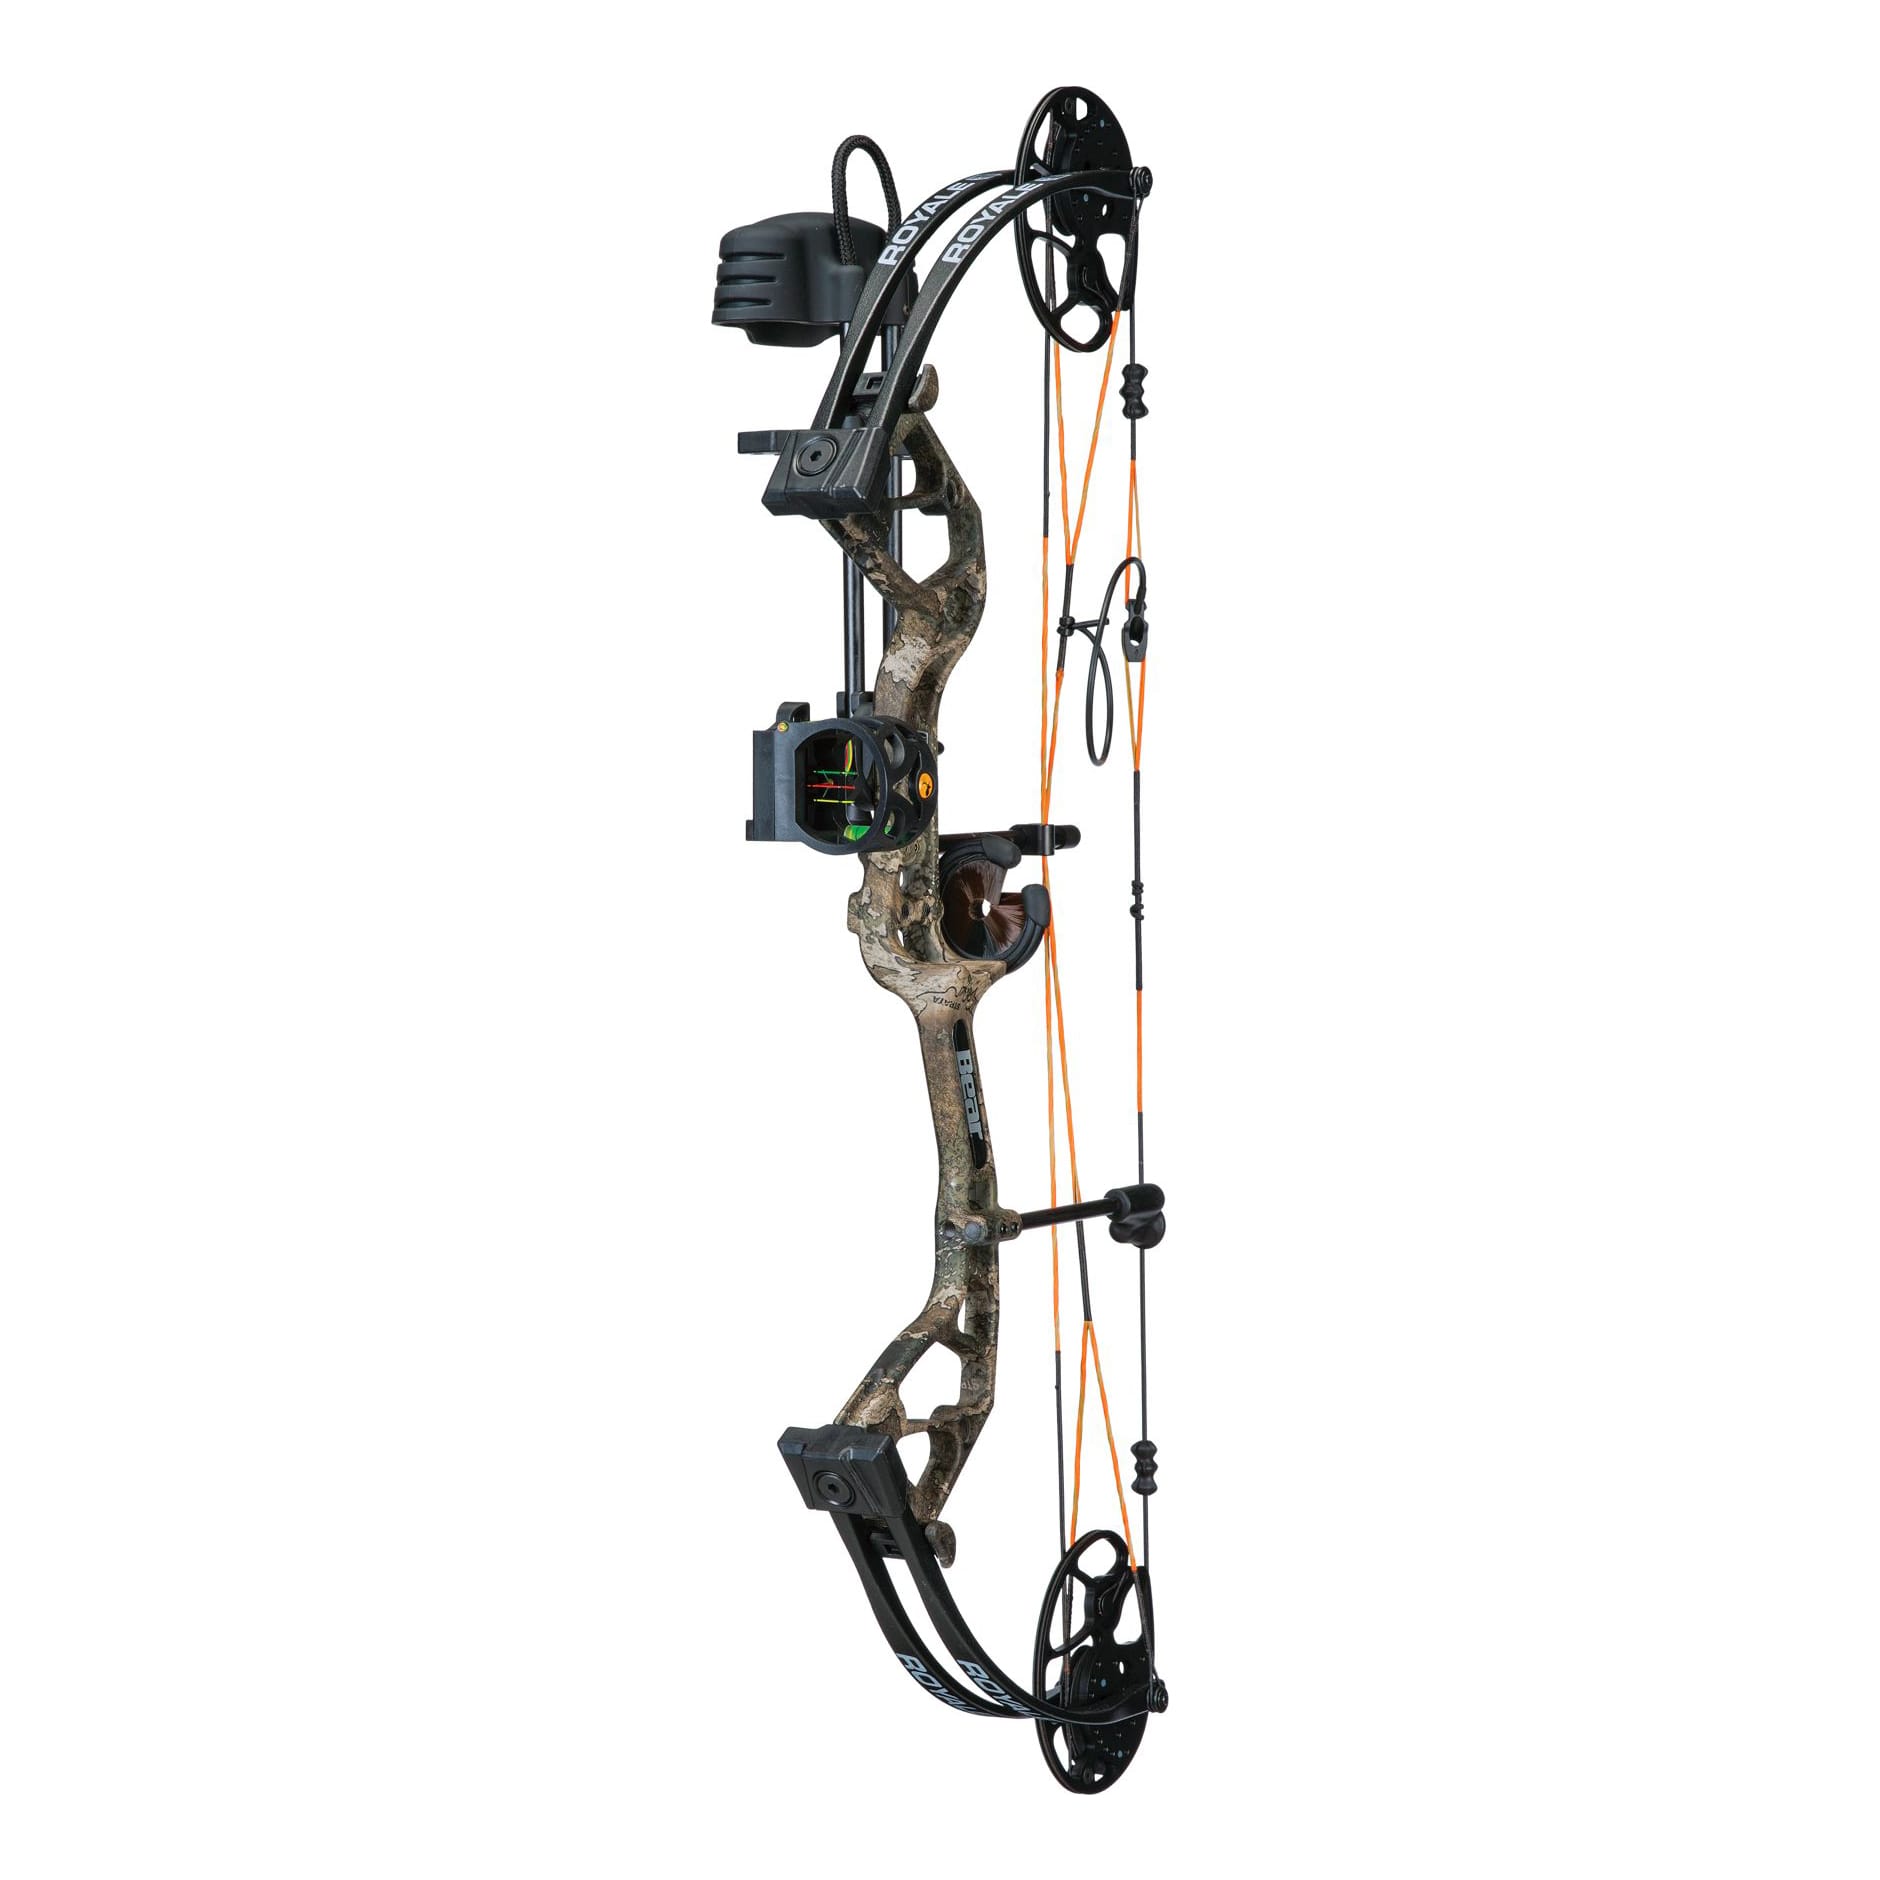 Anti-dry fire keyway trigger system for crossbows Patent Grant Rowzie, Jr.  , et al. Sep [Parker Compound Bows, Inc.]